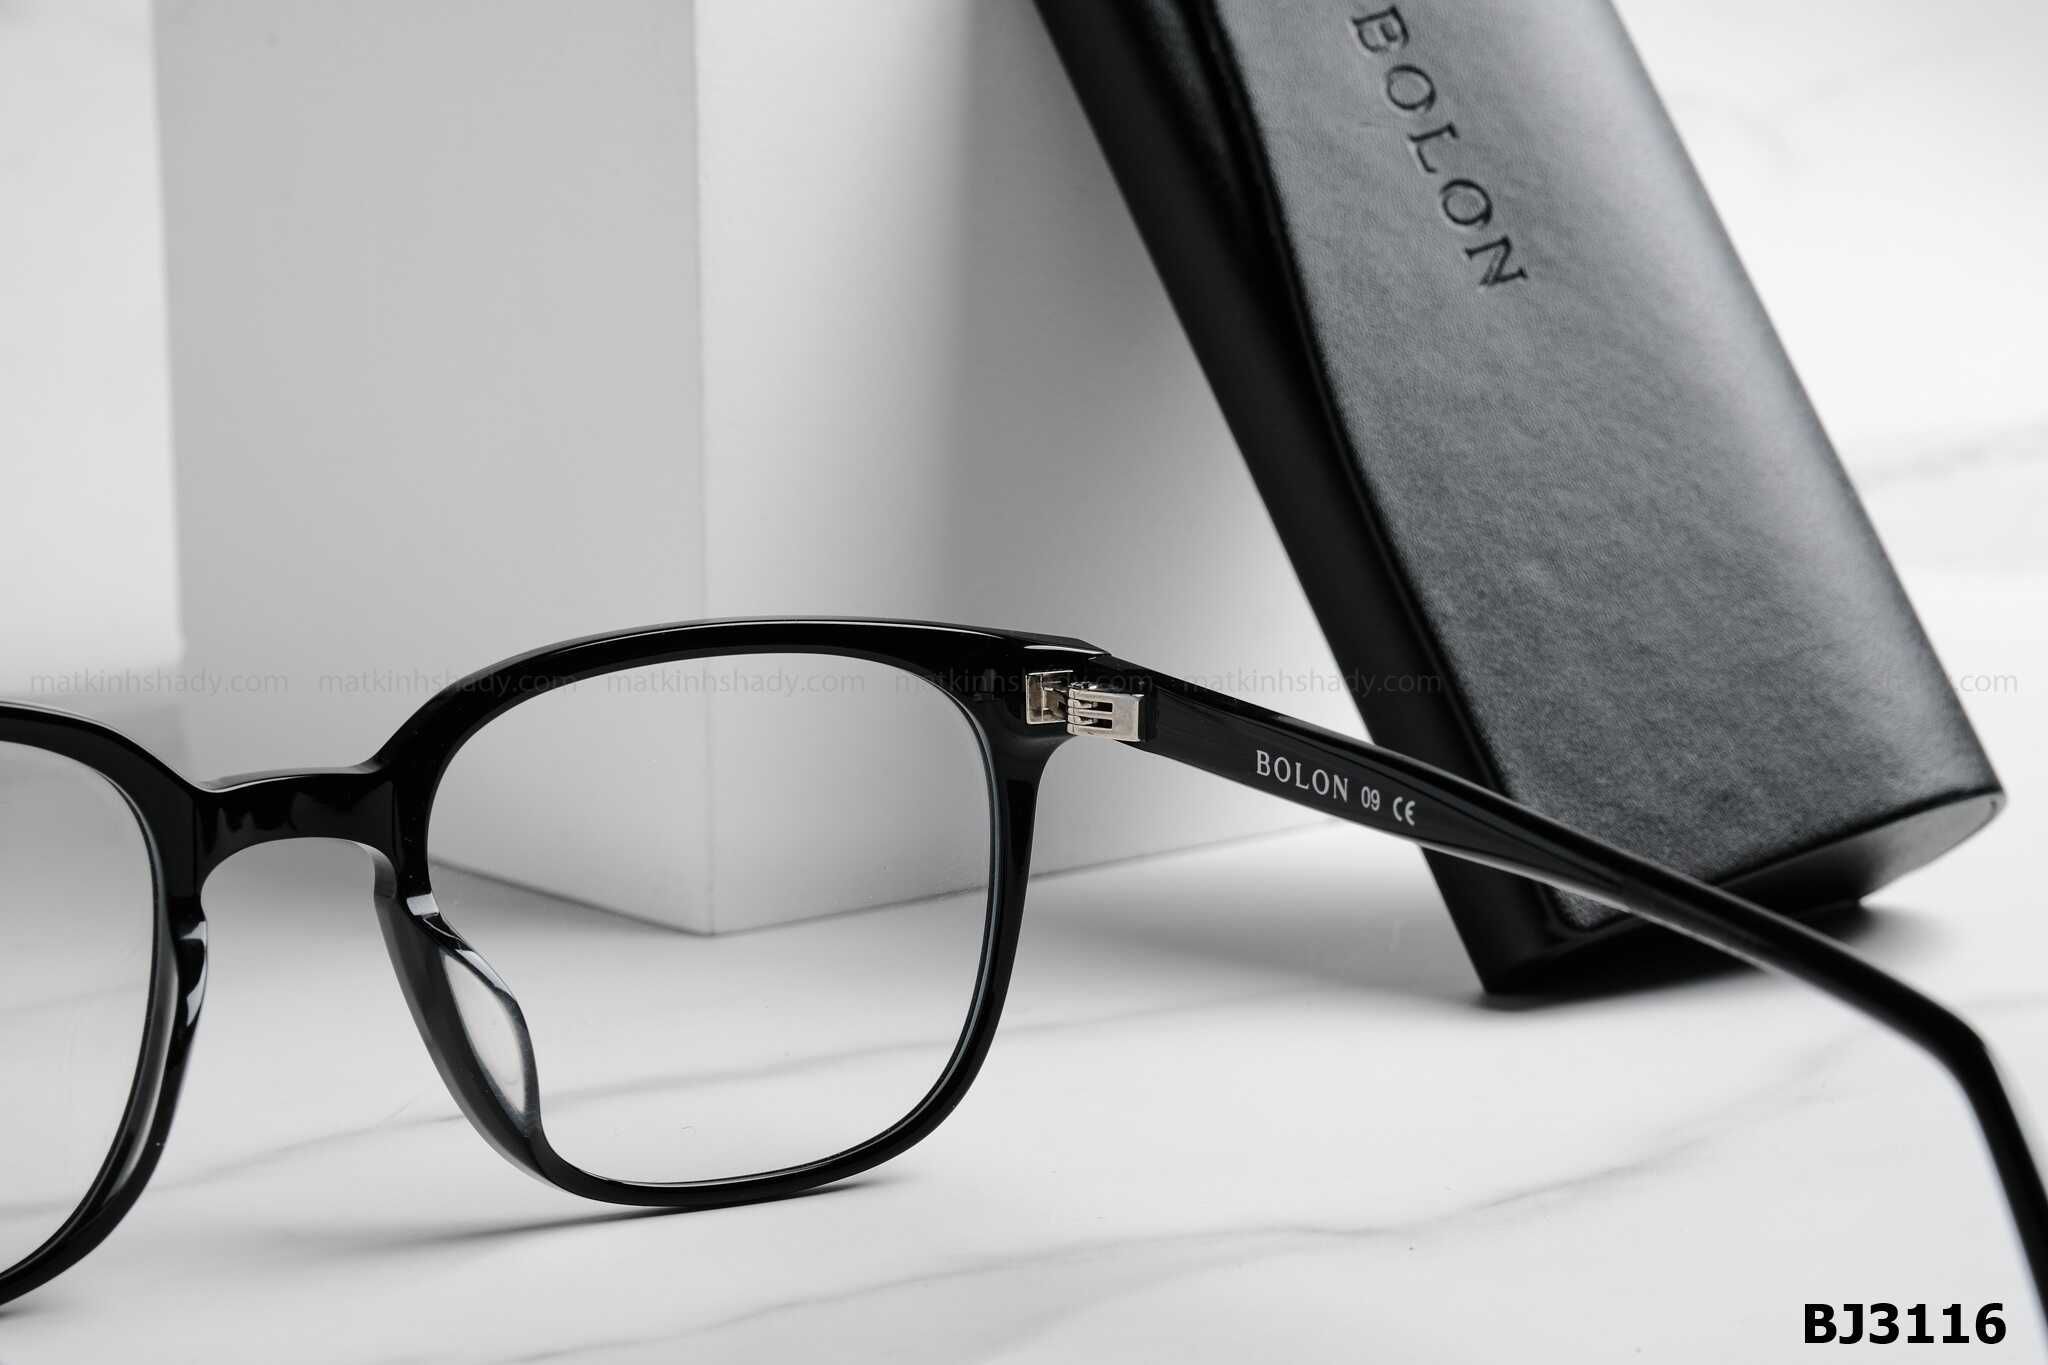  Bolon Eyewear - Glasses - BJ3116 